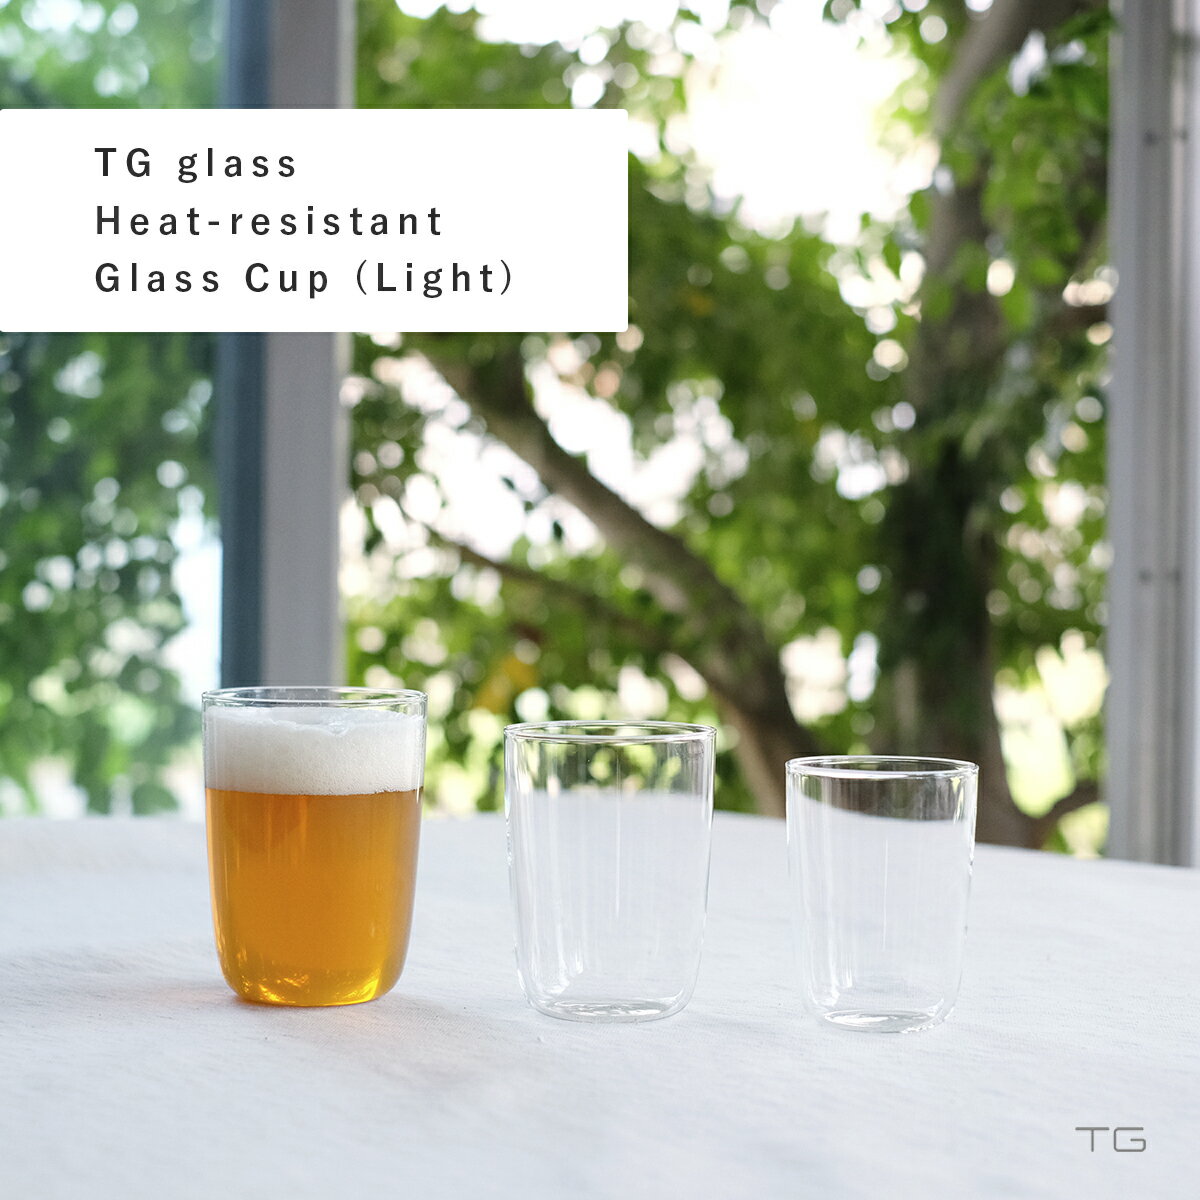 TG glass Light 420ml eB[W[ OX Jbv Rbv ϔMKX NA H Ɏq [Vl  Vv r[OX rAJbv EH[^[OX vJbv y H@ dqWOK pKX  Mtg v[g 蕨 ̓ Heat-resistant